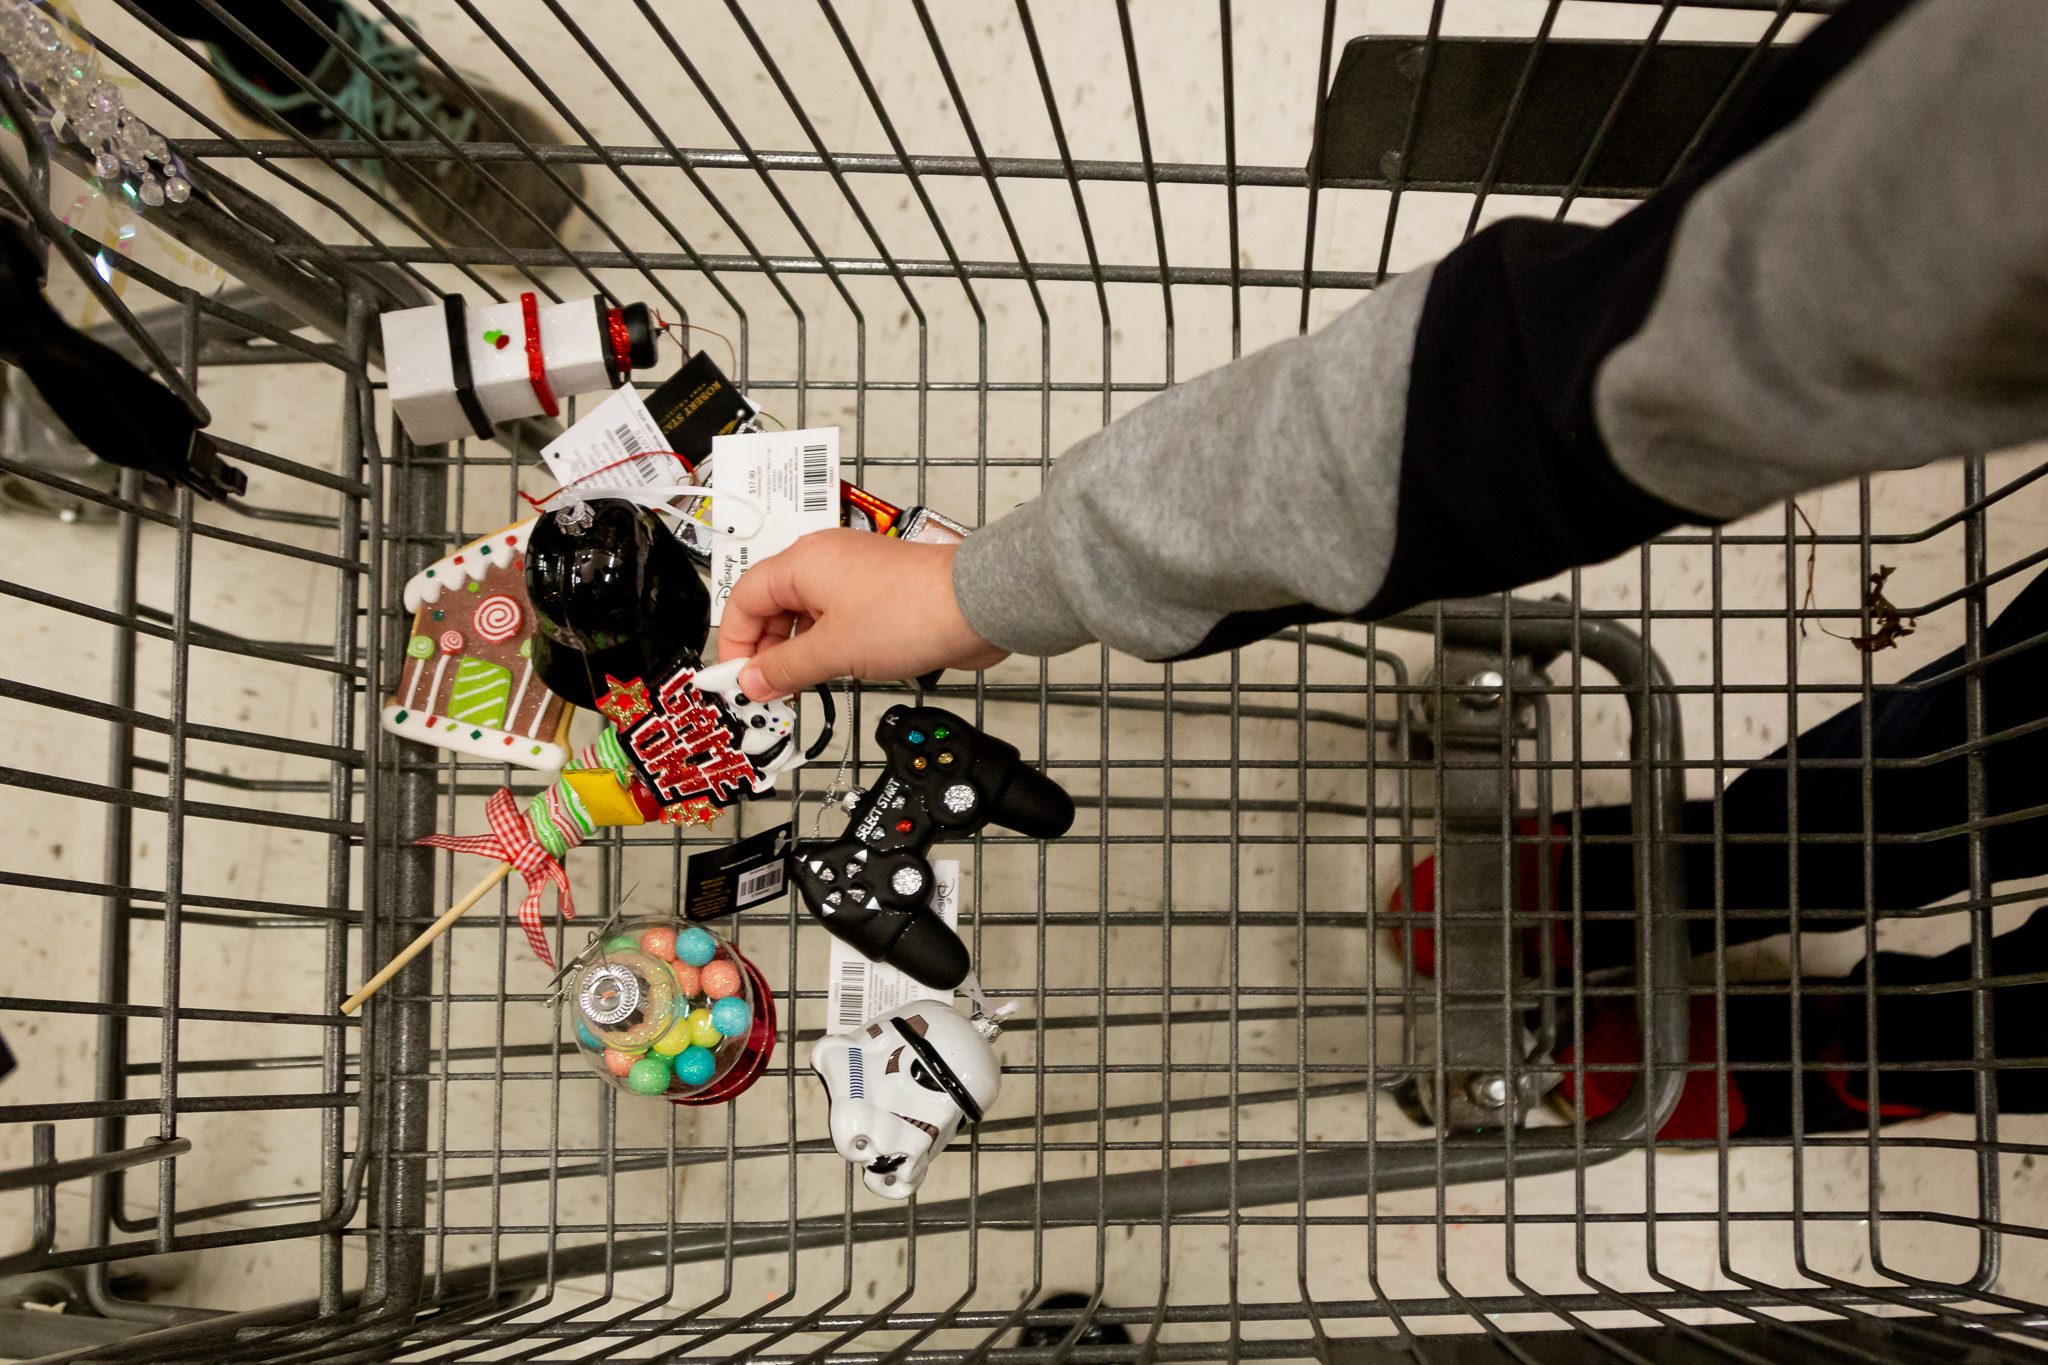 Gear vs Education - puting ornaments in shopping cart